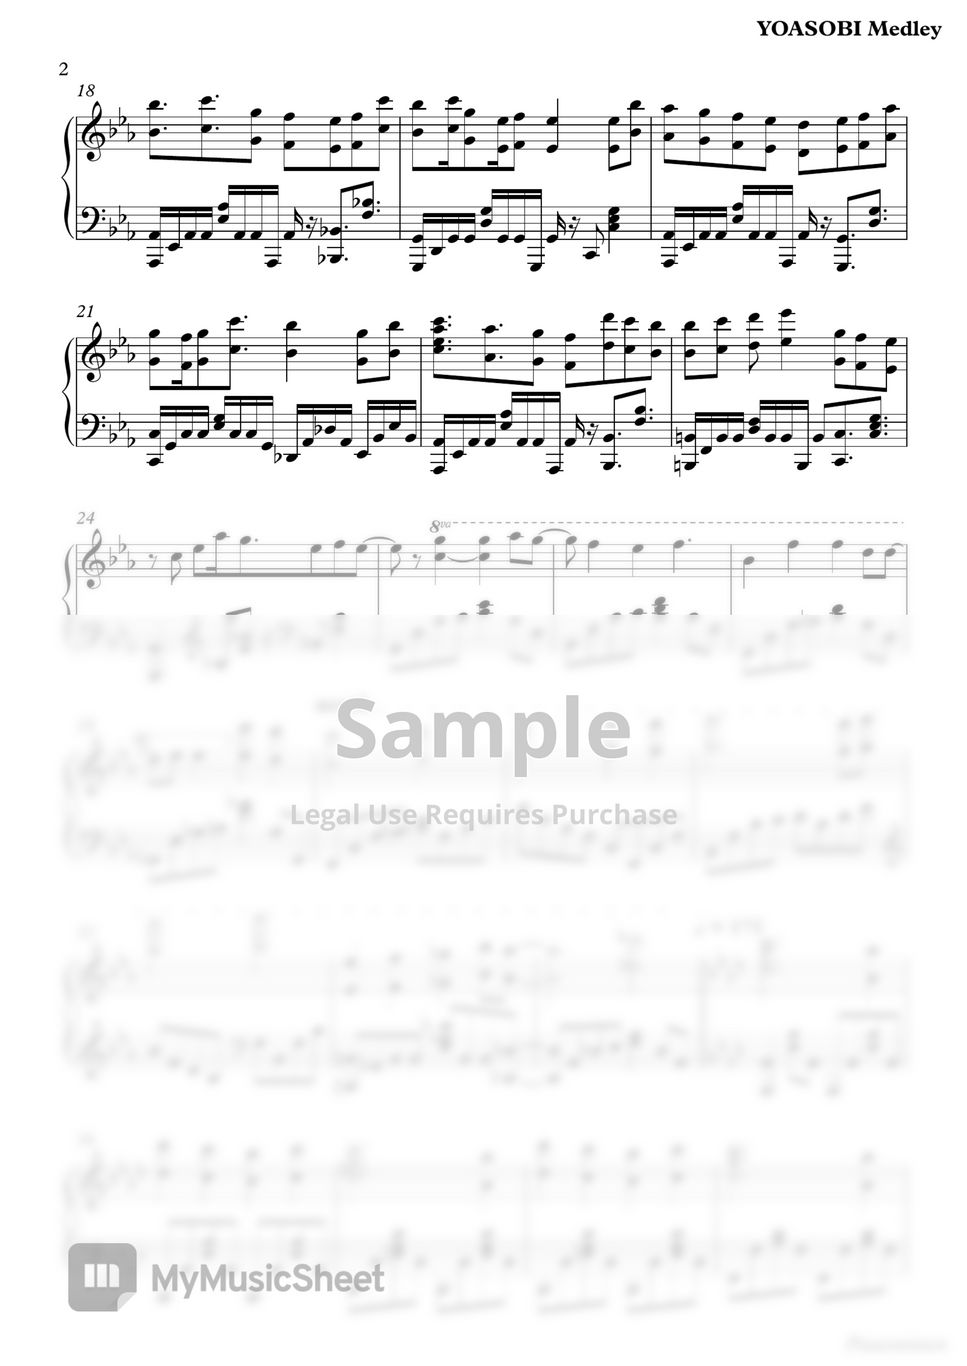 YOASOBI - YOASOBI Medley by Pianominion